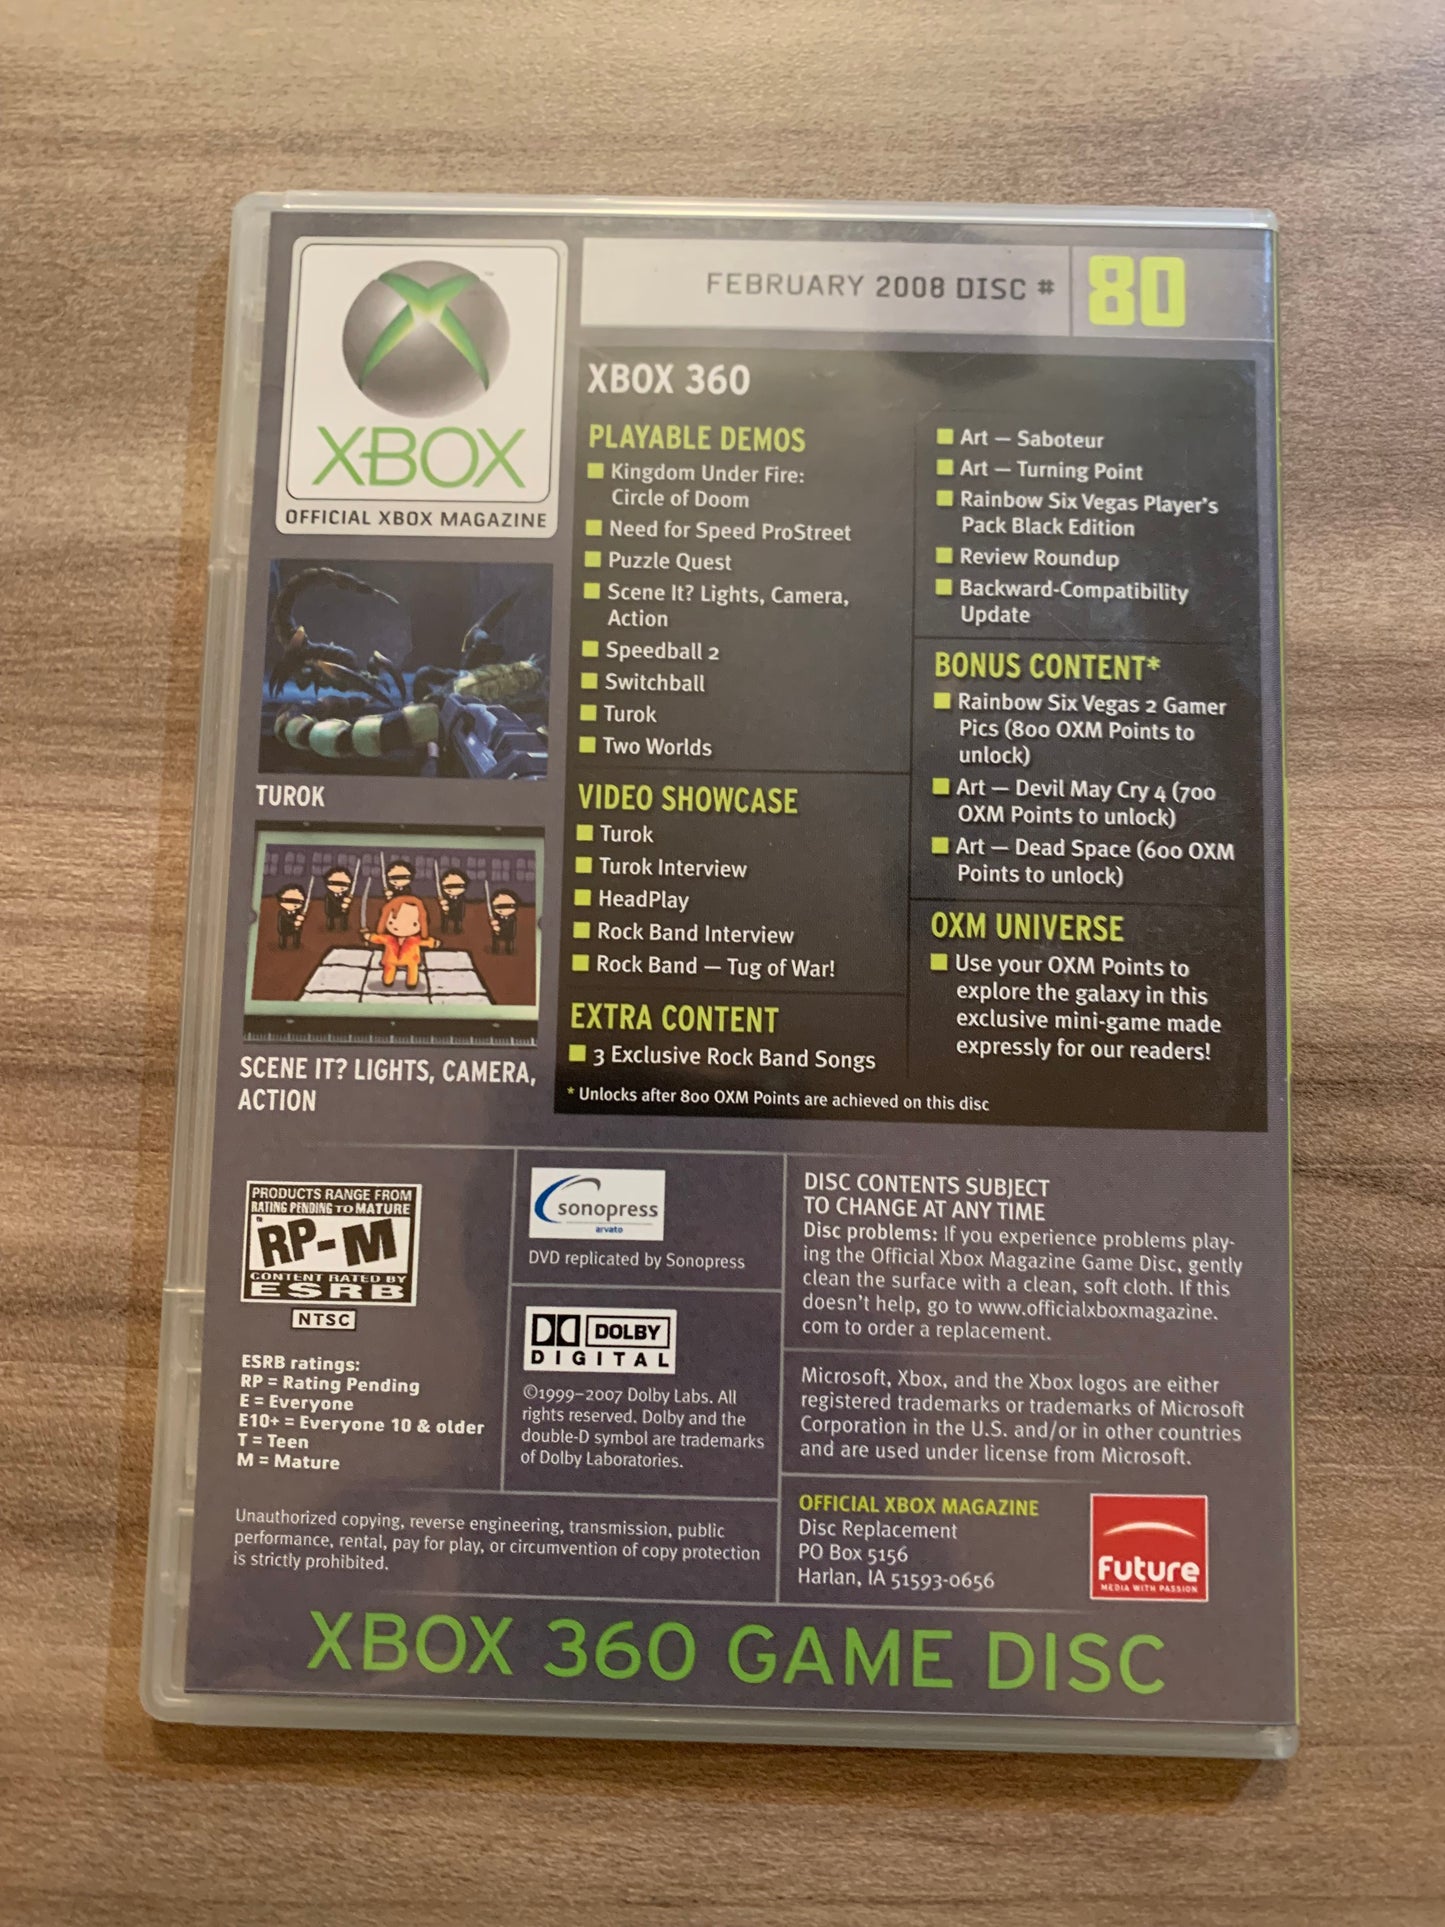 MiCROSOFT XBOX 360 | OFFiCiAL XBOX MAGAZiNE DEMO GAME DiSC CD #80 FEBRUARY 2008